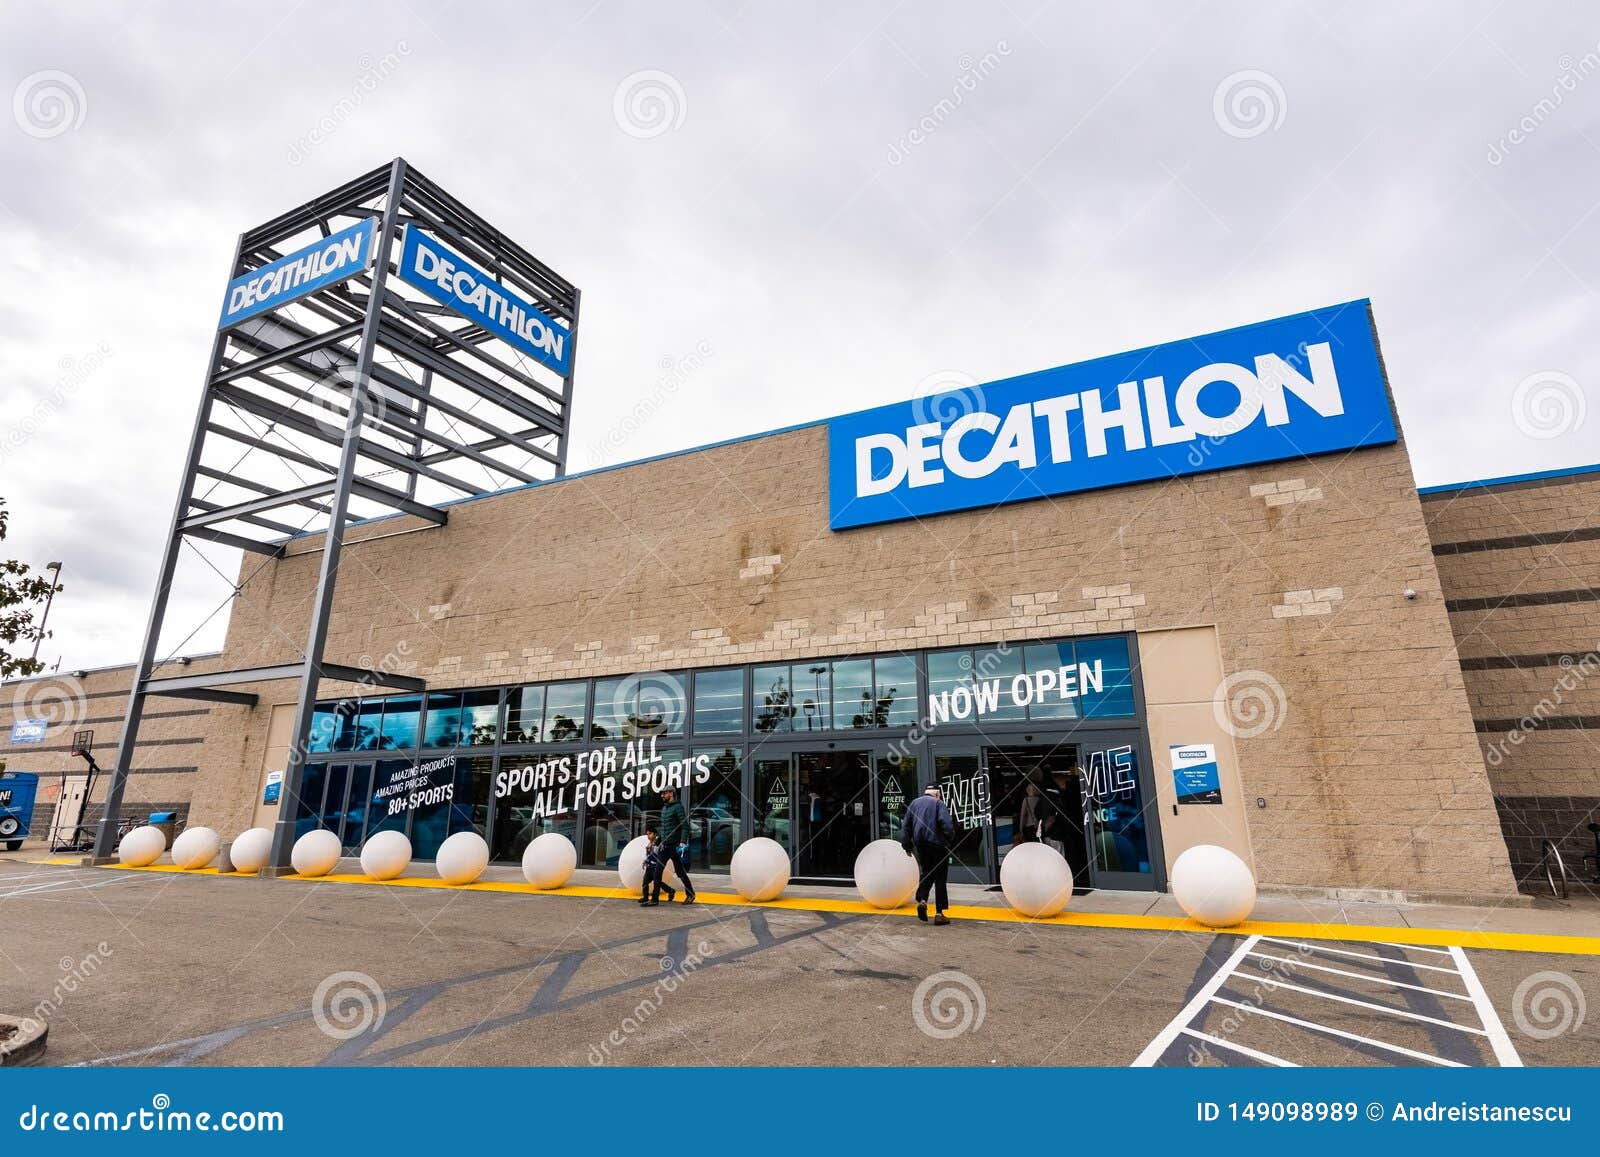 decathlon usa locations